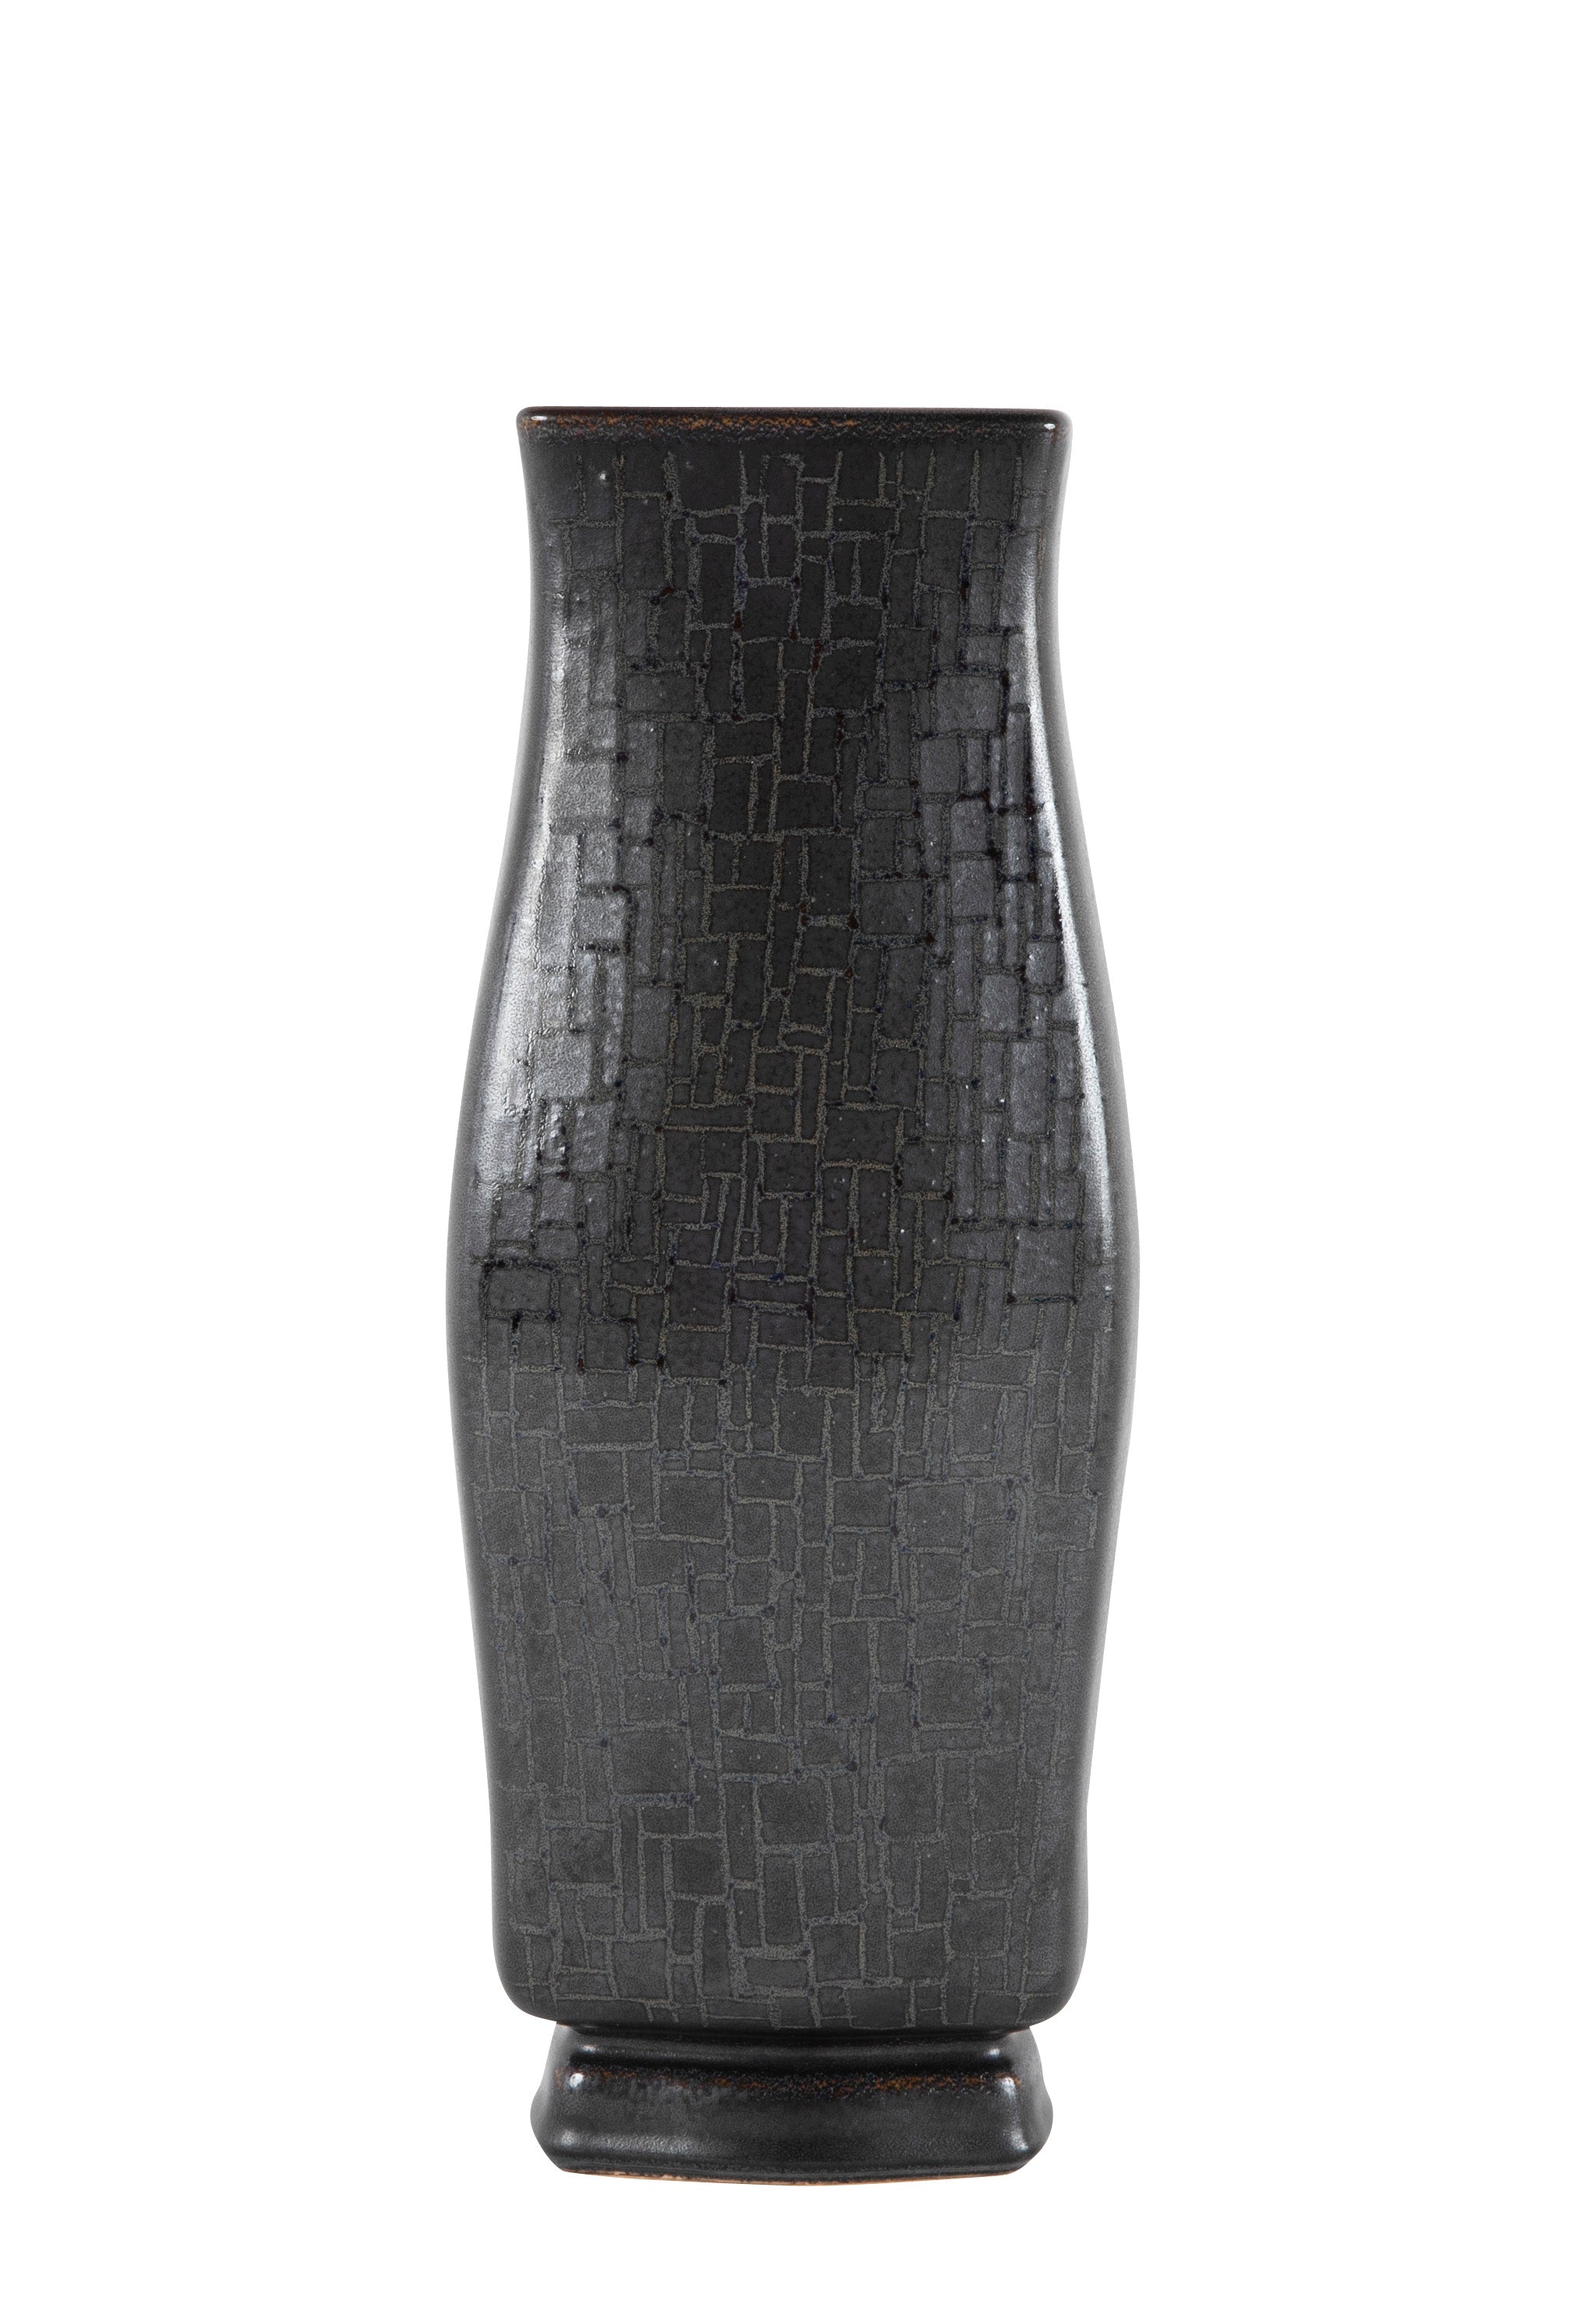 Sevres Marked Vase by Contemporary Ceramist Manuel Cordel